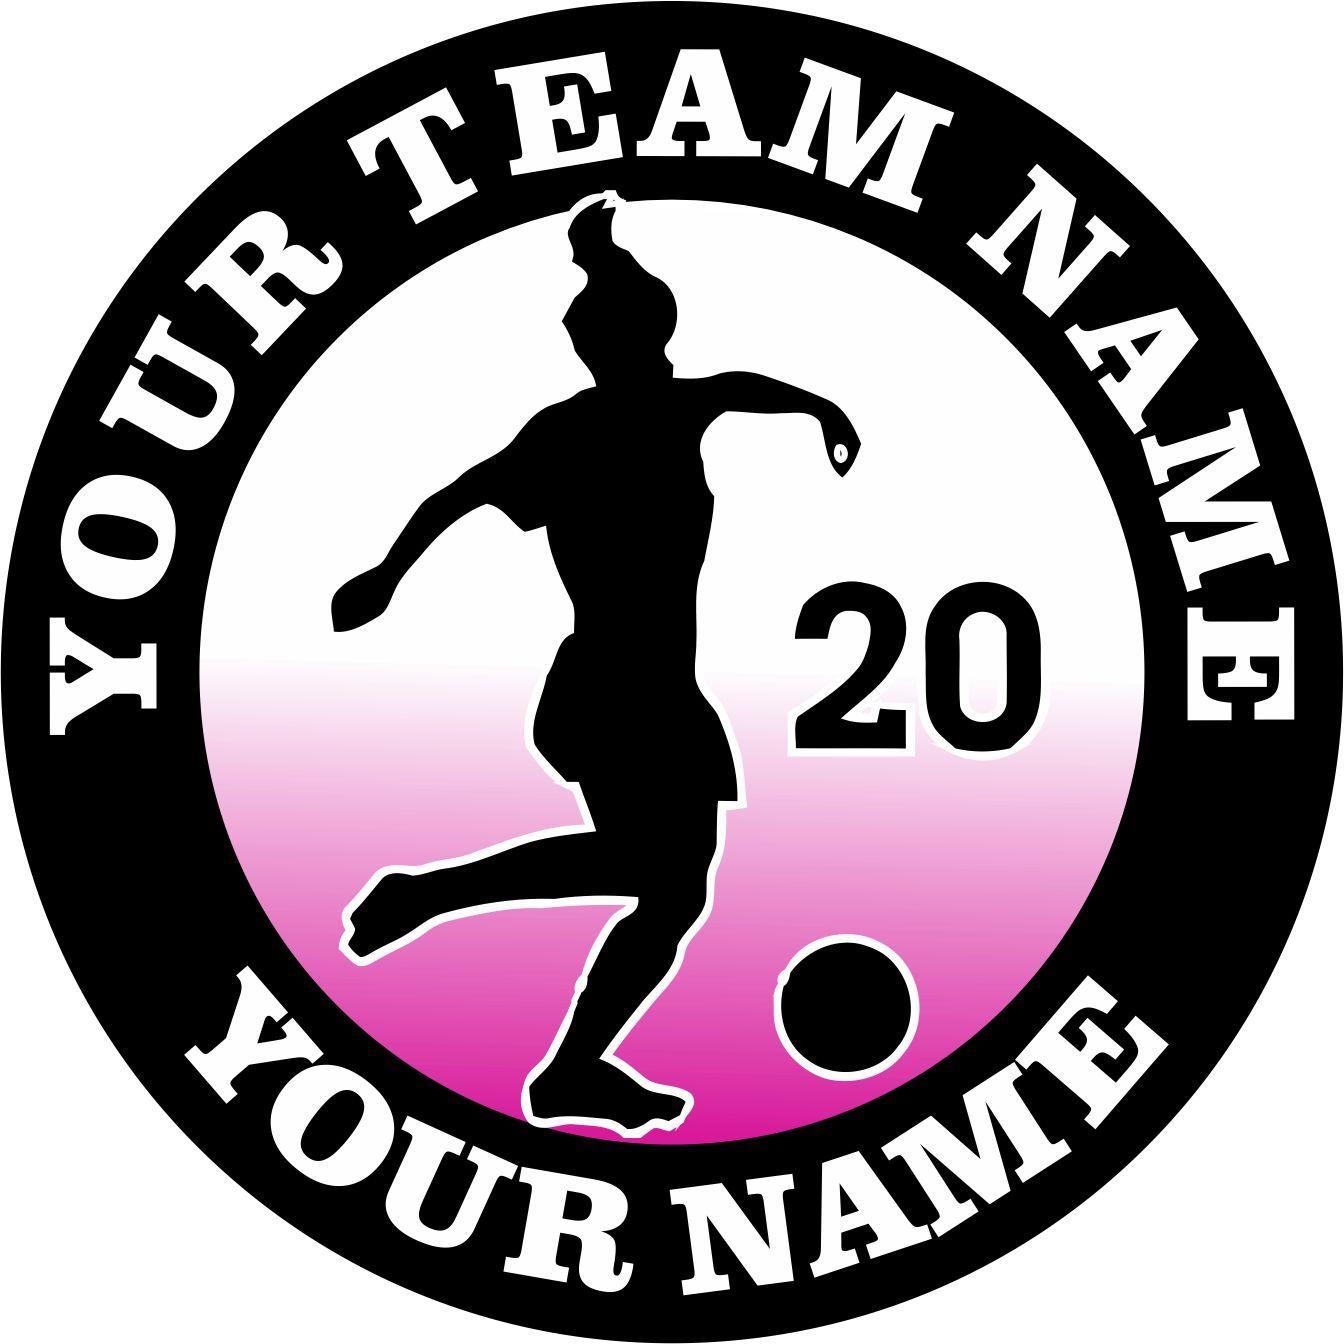 Cool Soccer Logo - Customized Soccer Logo 01 The Customized Soccer Logo is designed